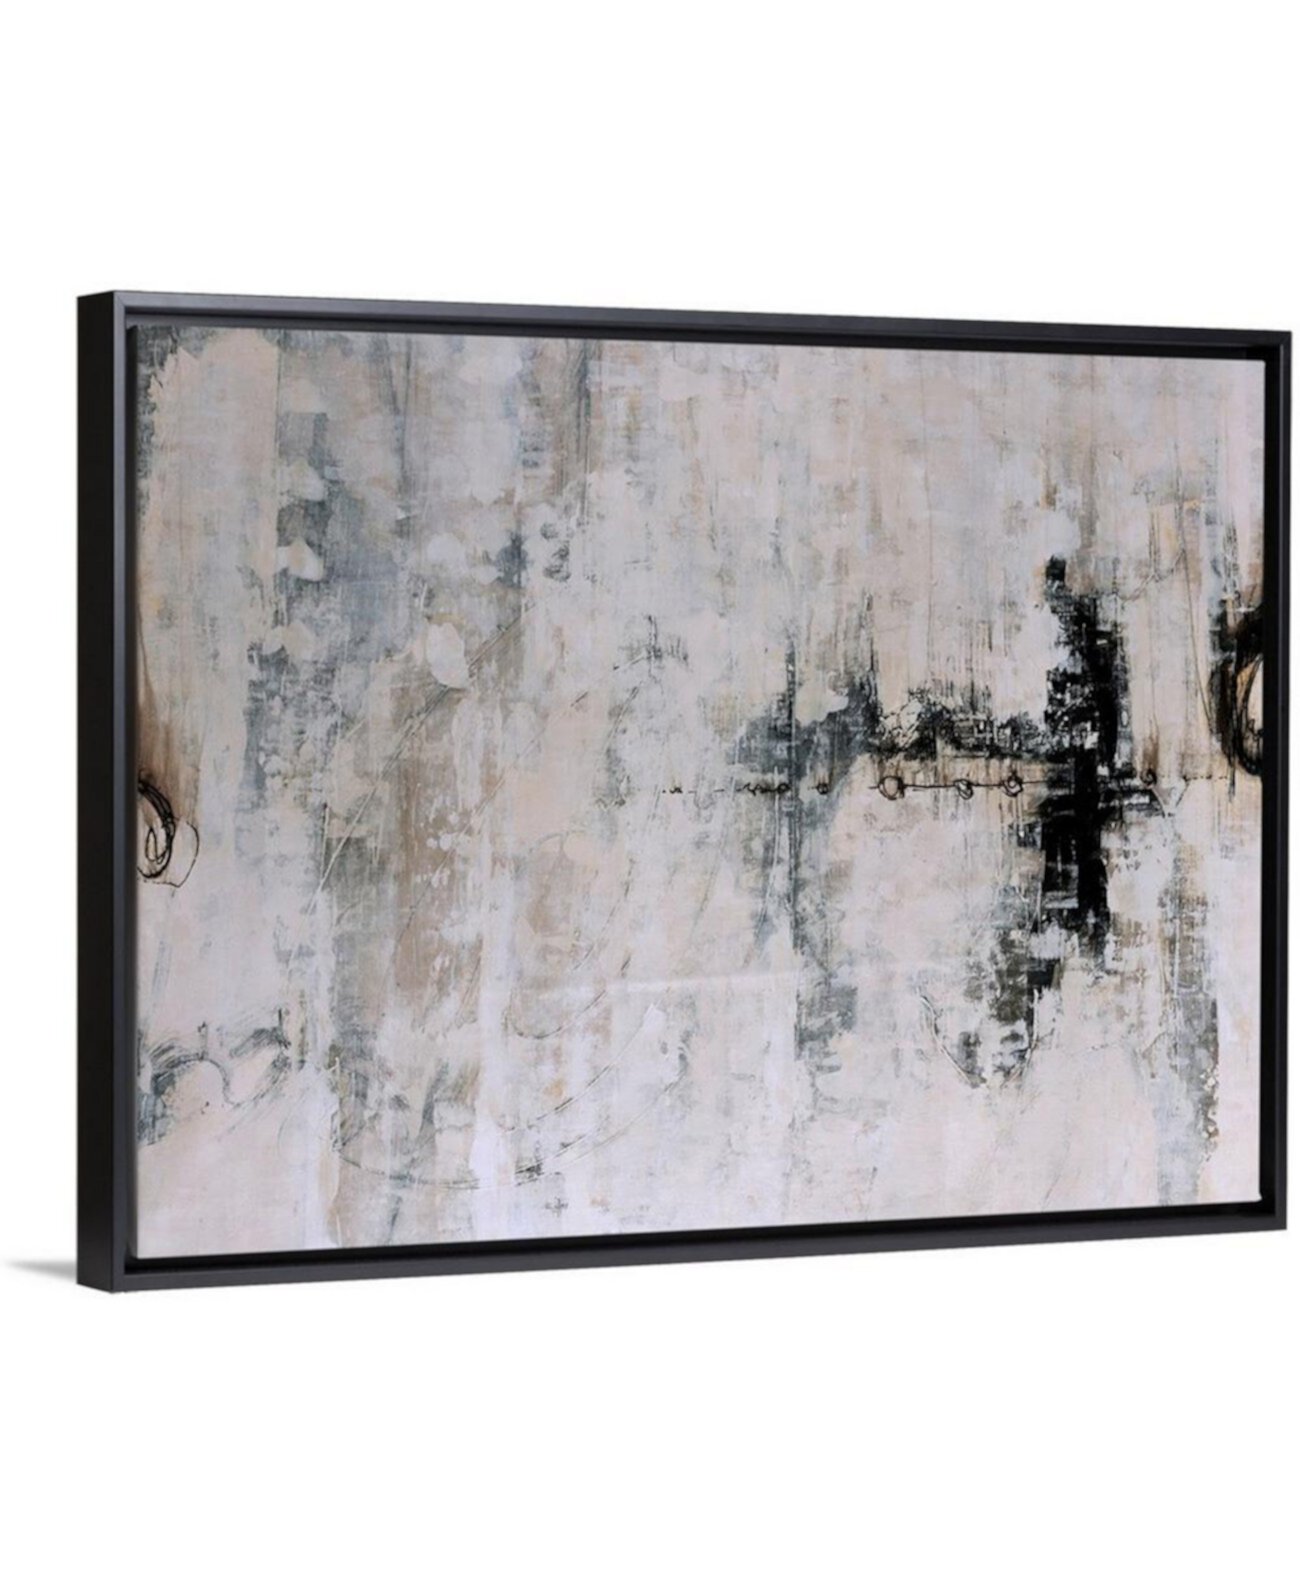 24 дюйма x 18 дюймов "Икар" Джошуа Шикера Картины на холсте GreatBigCanvas